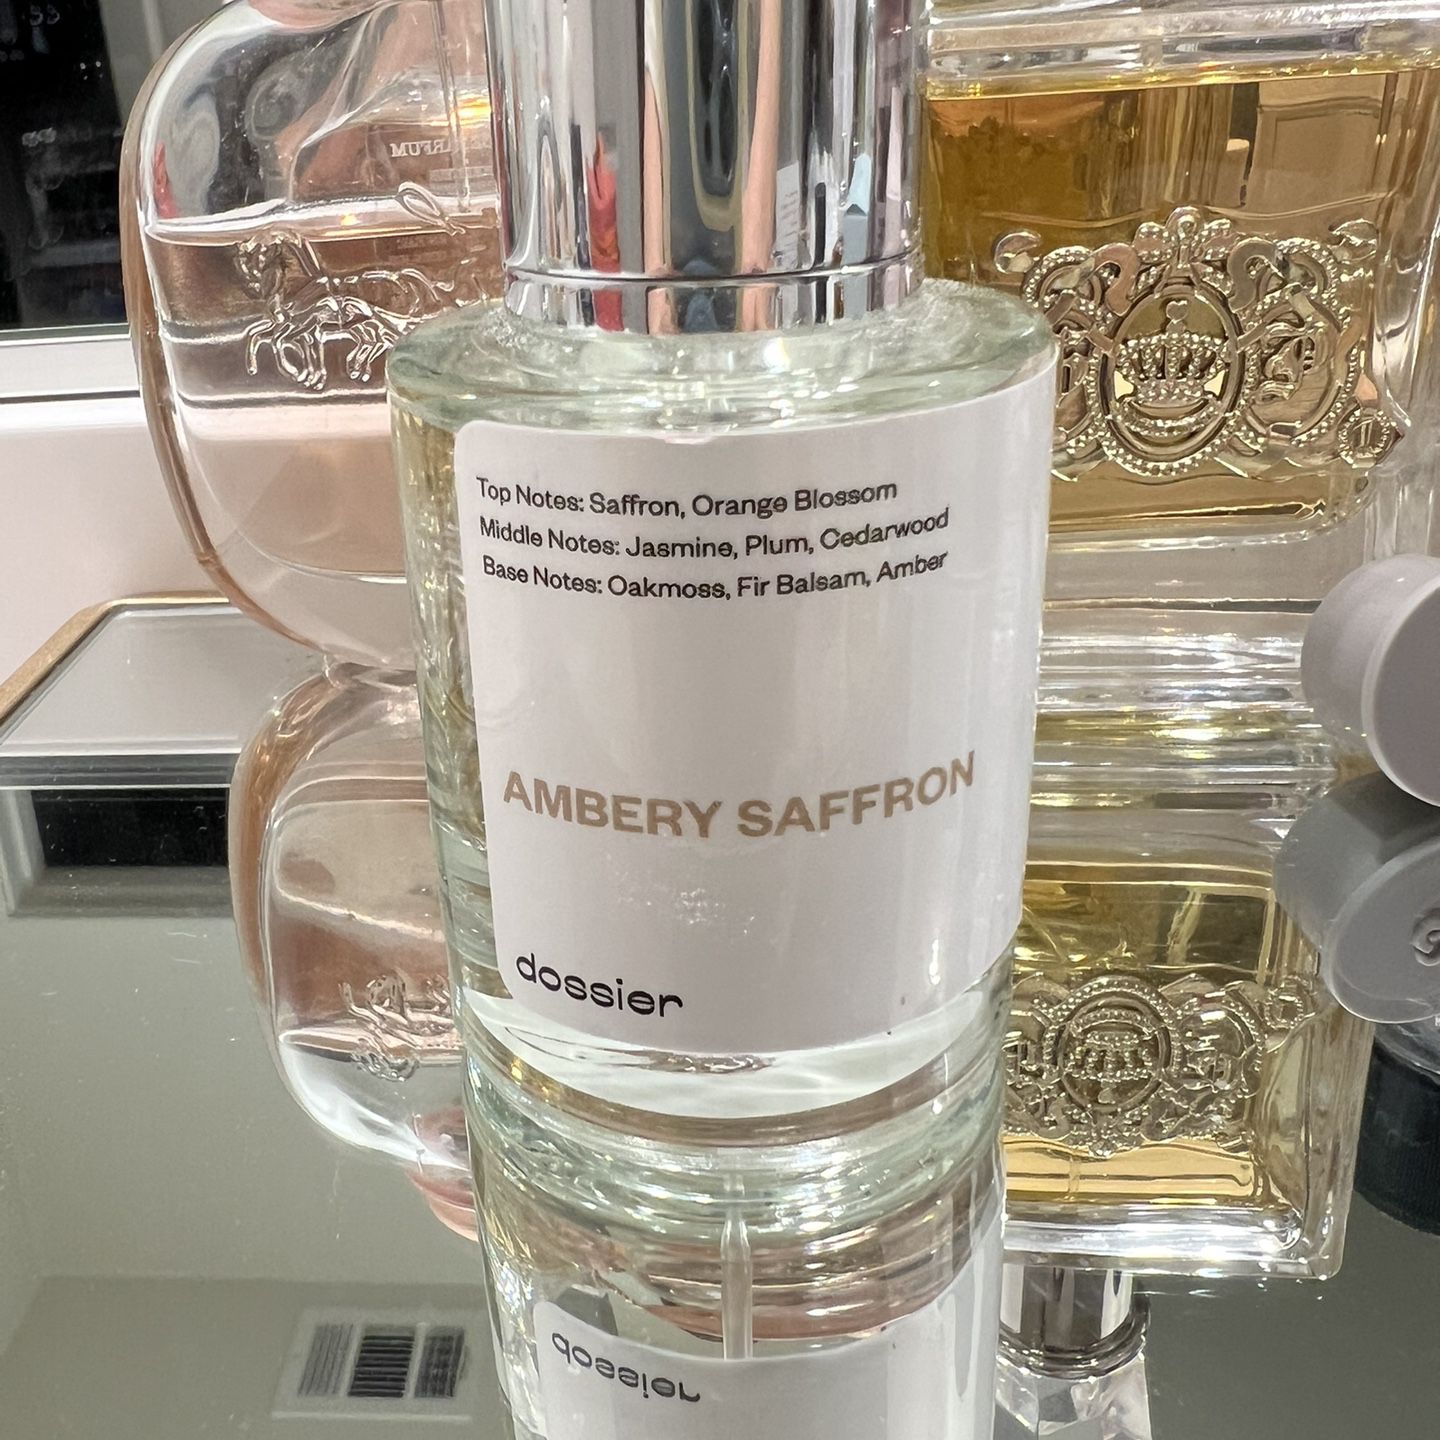 Dossier Ambery Saffron Fragrance 50ml/1.7oz